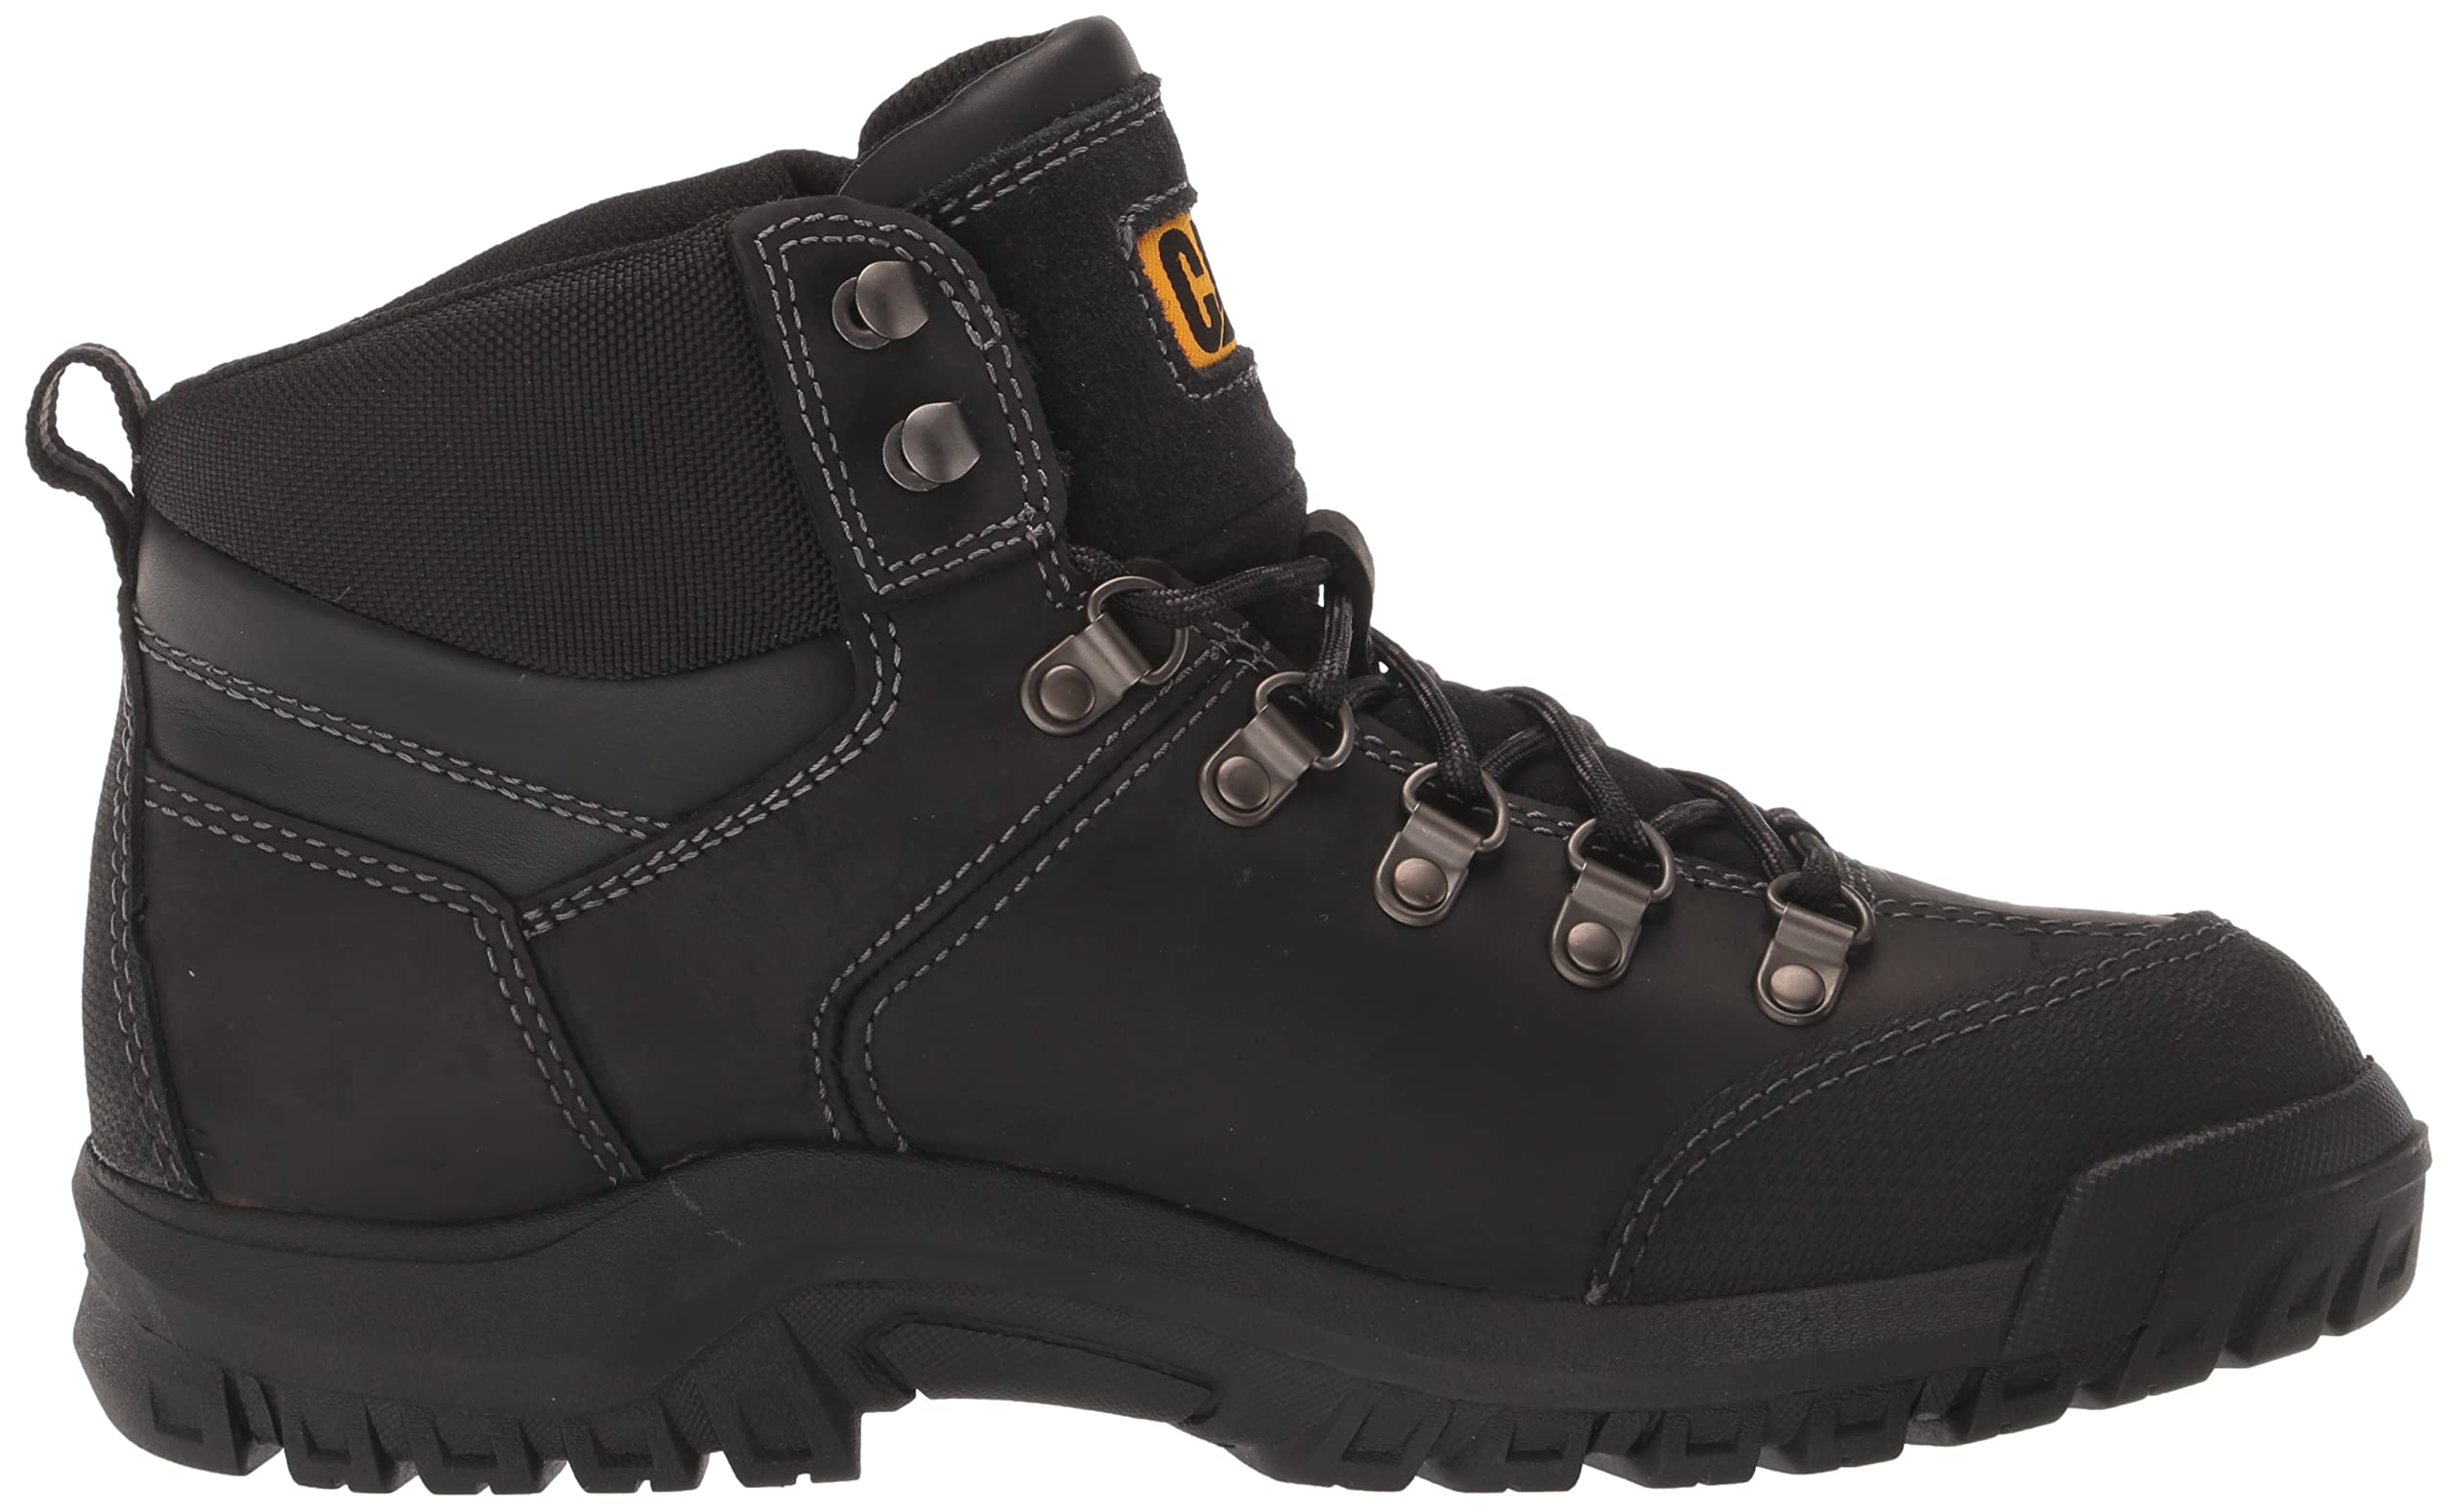 Cat Footwear Men's Threshold Waterproof Soft Toe Work Boot, Black, 11